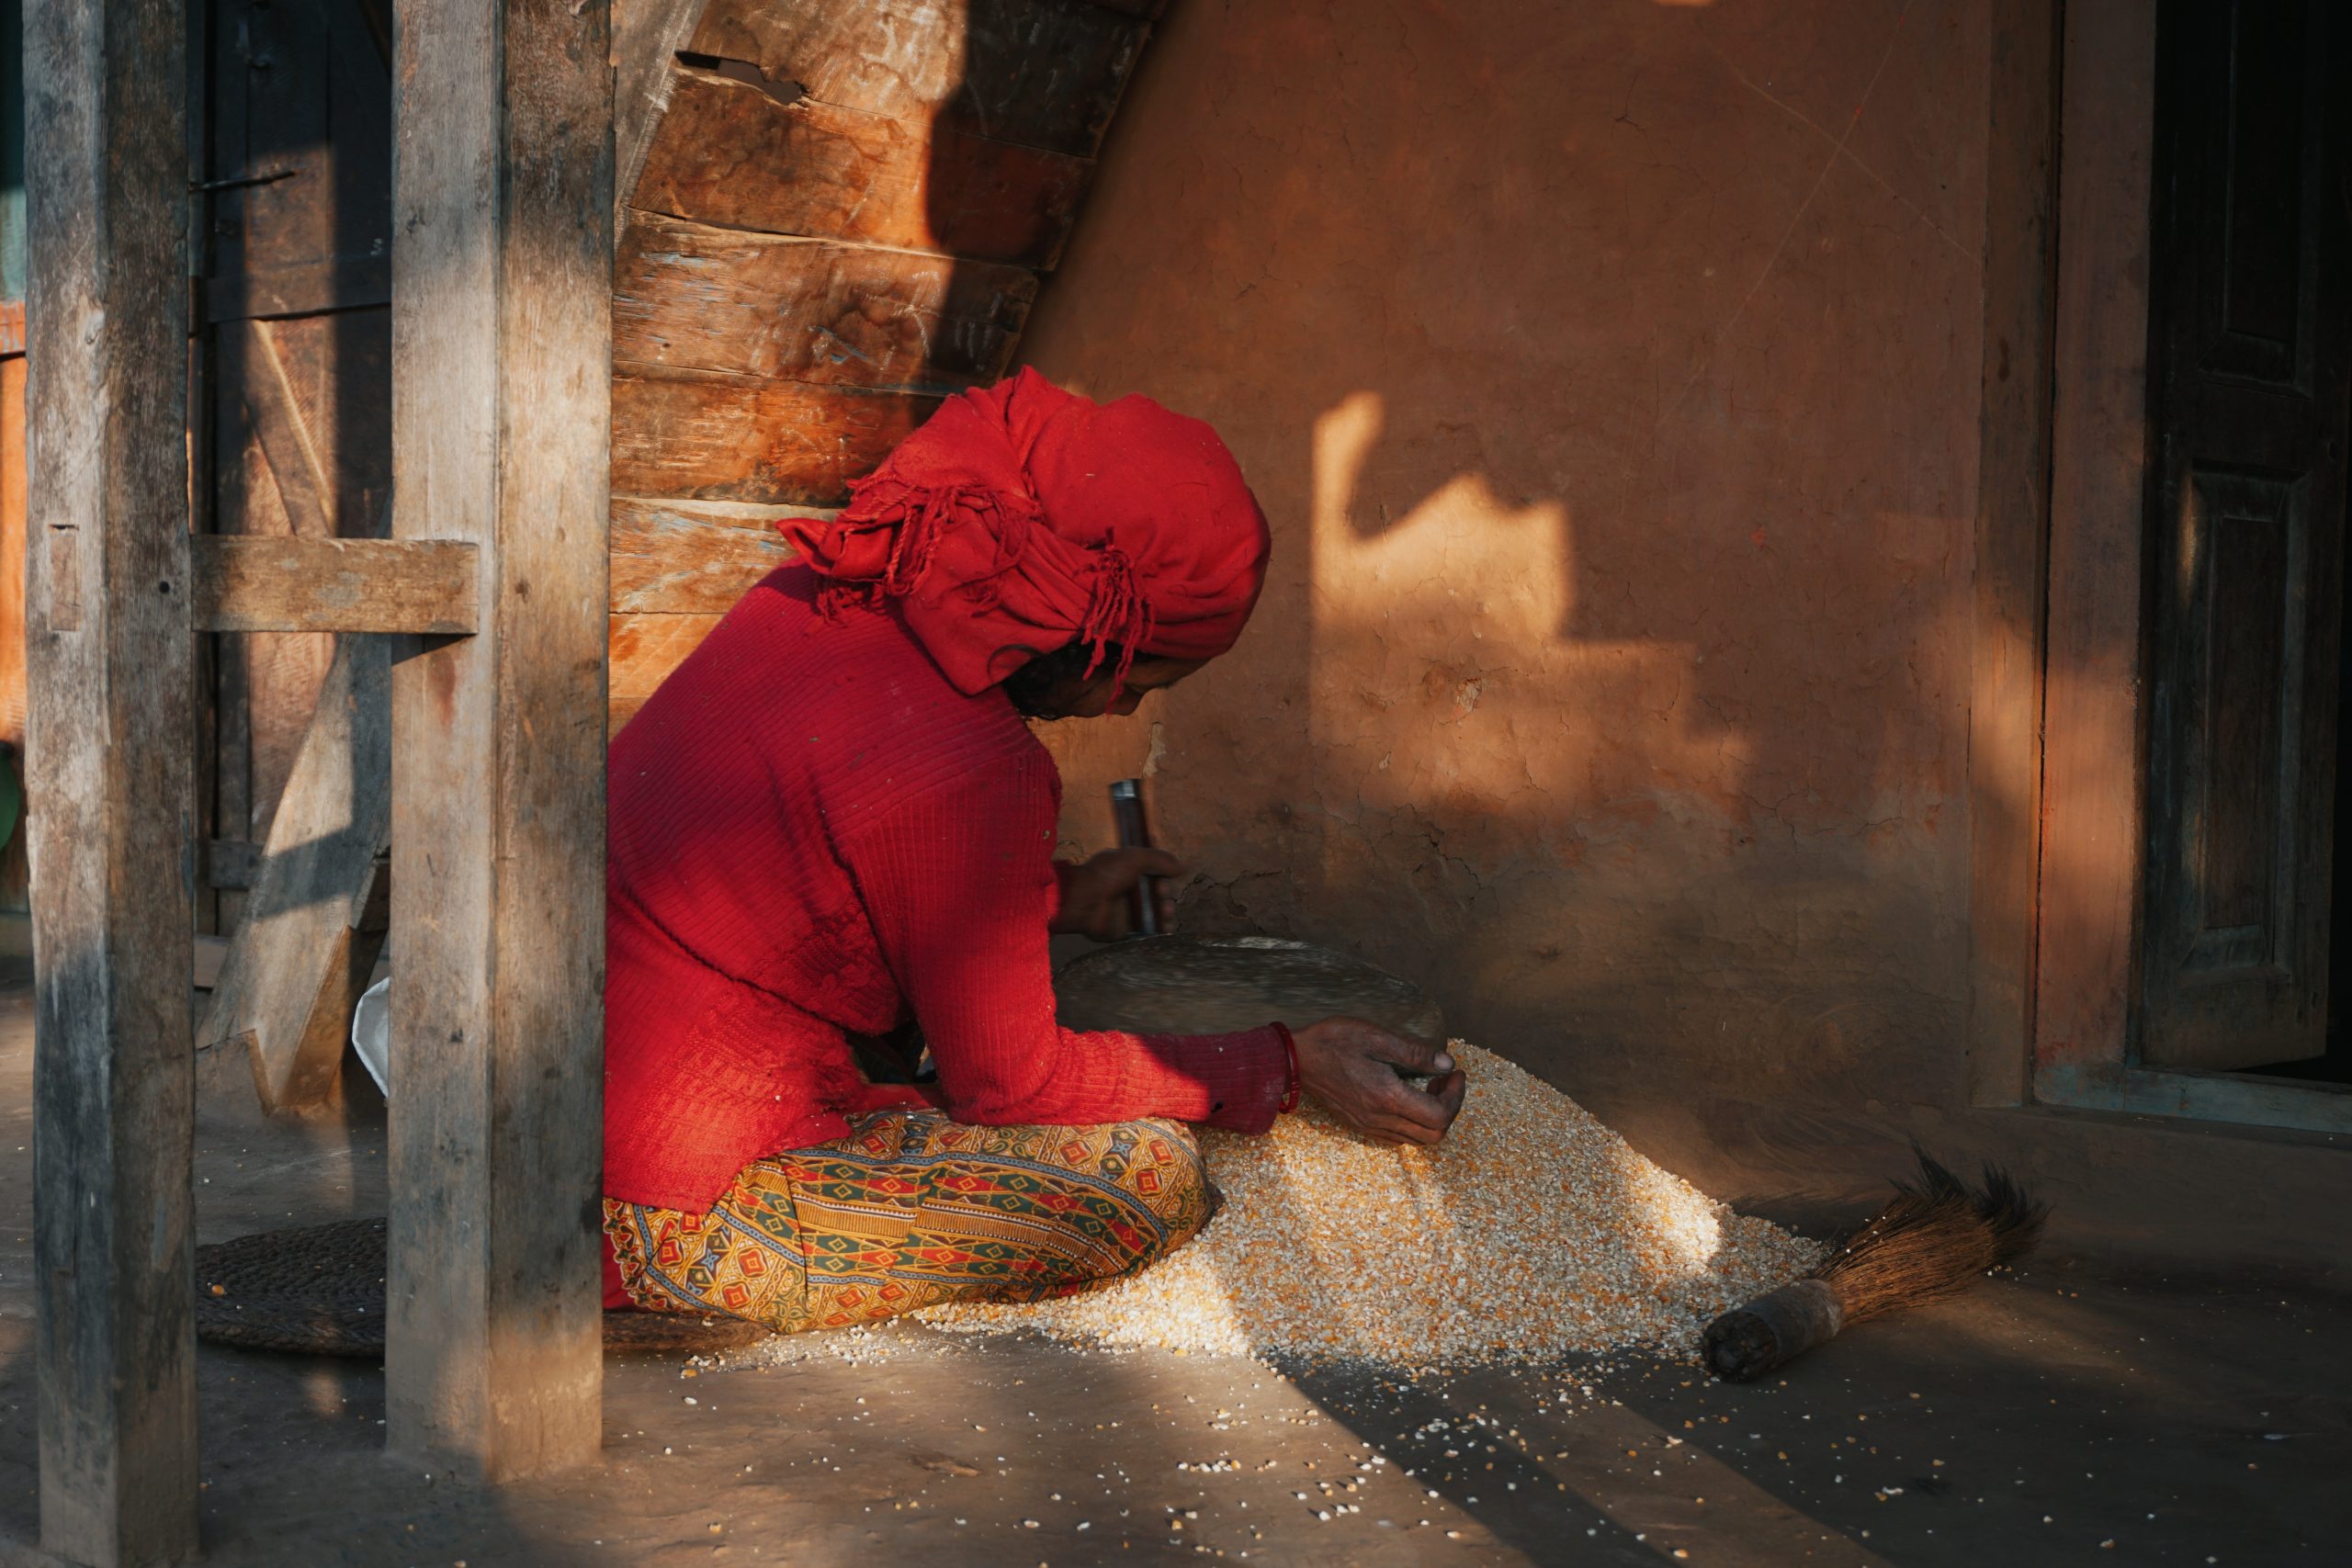 Maya moliendo makai -maiz- con su jatto -molino manual